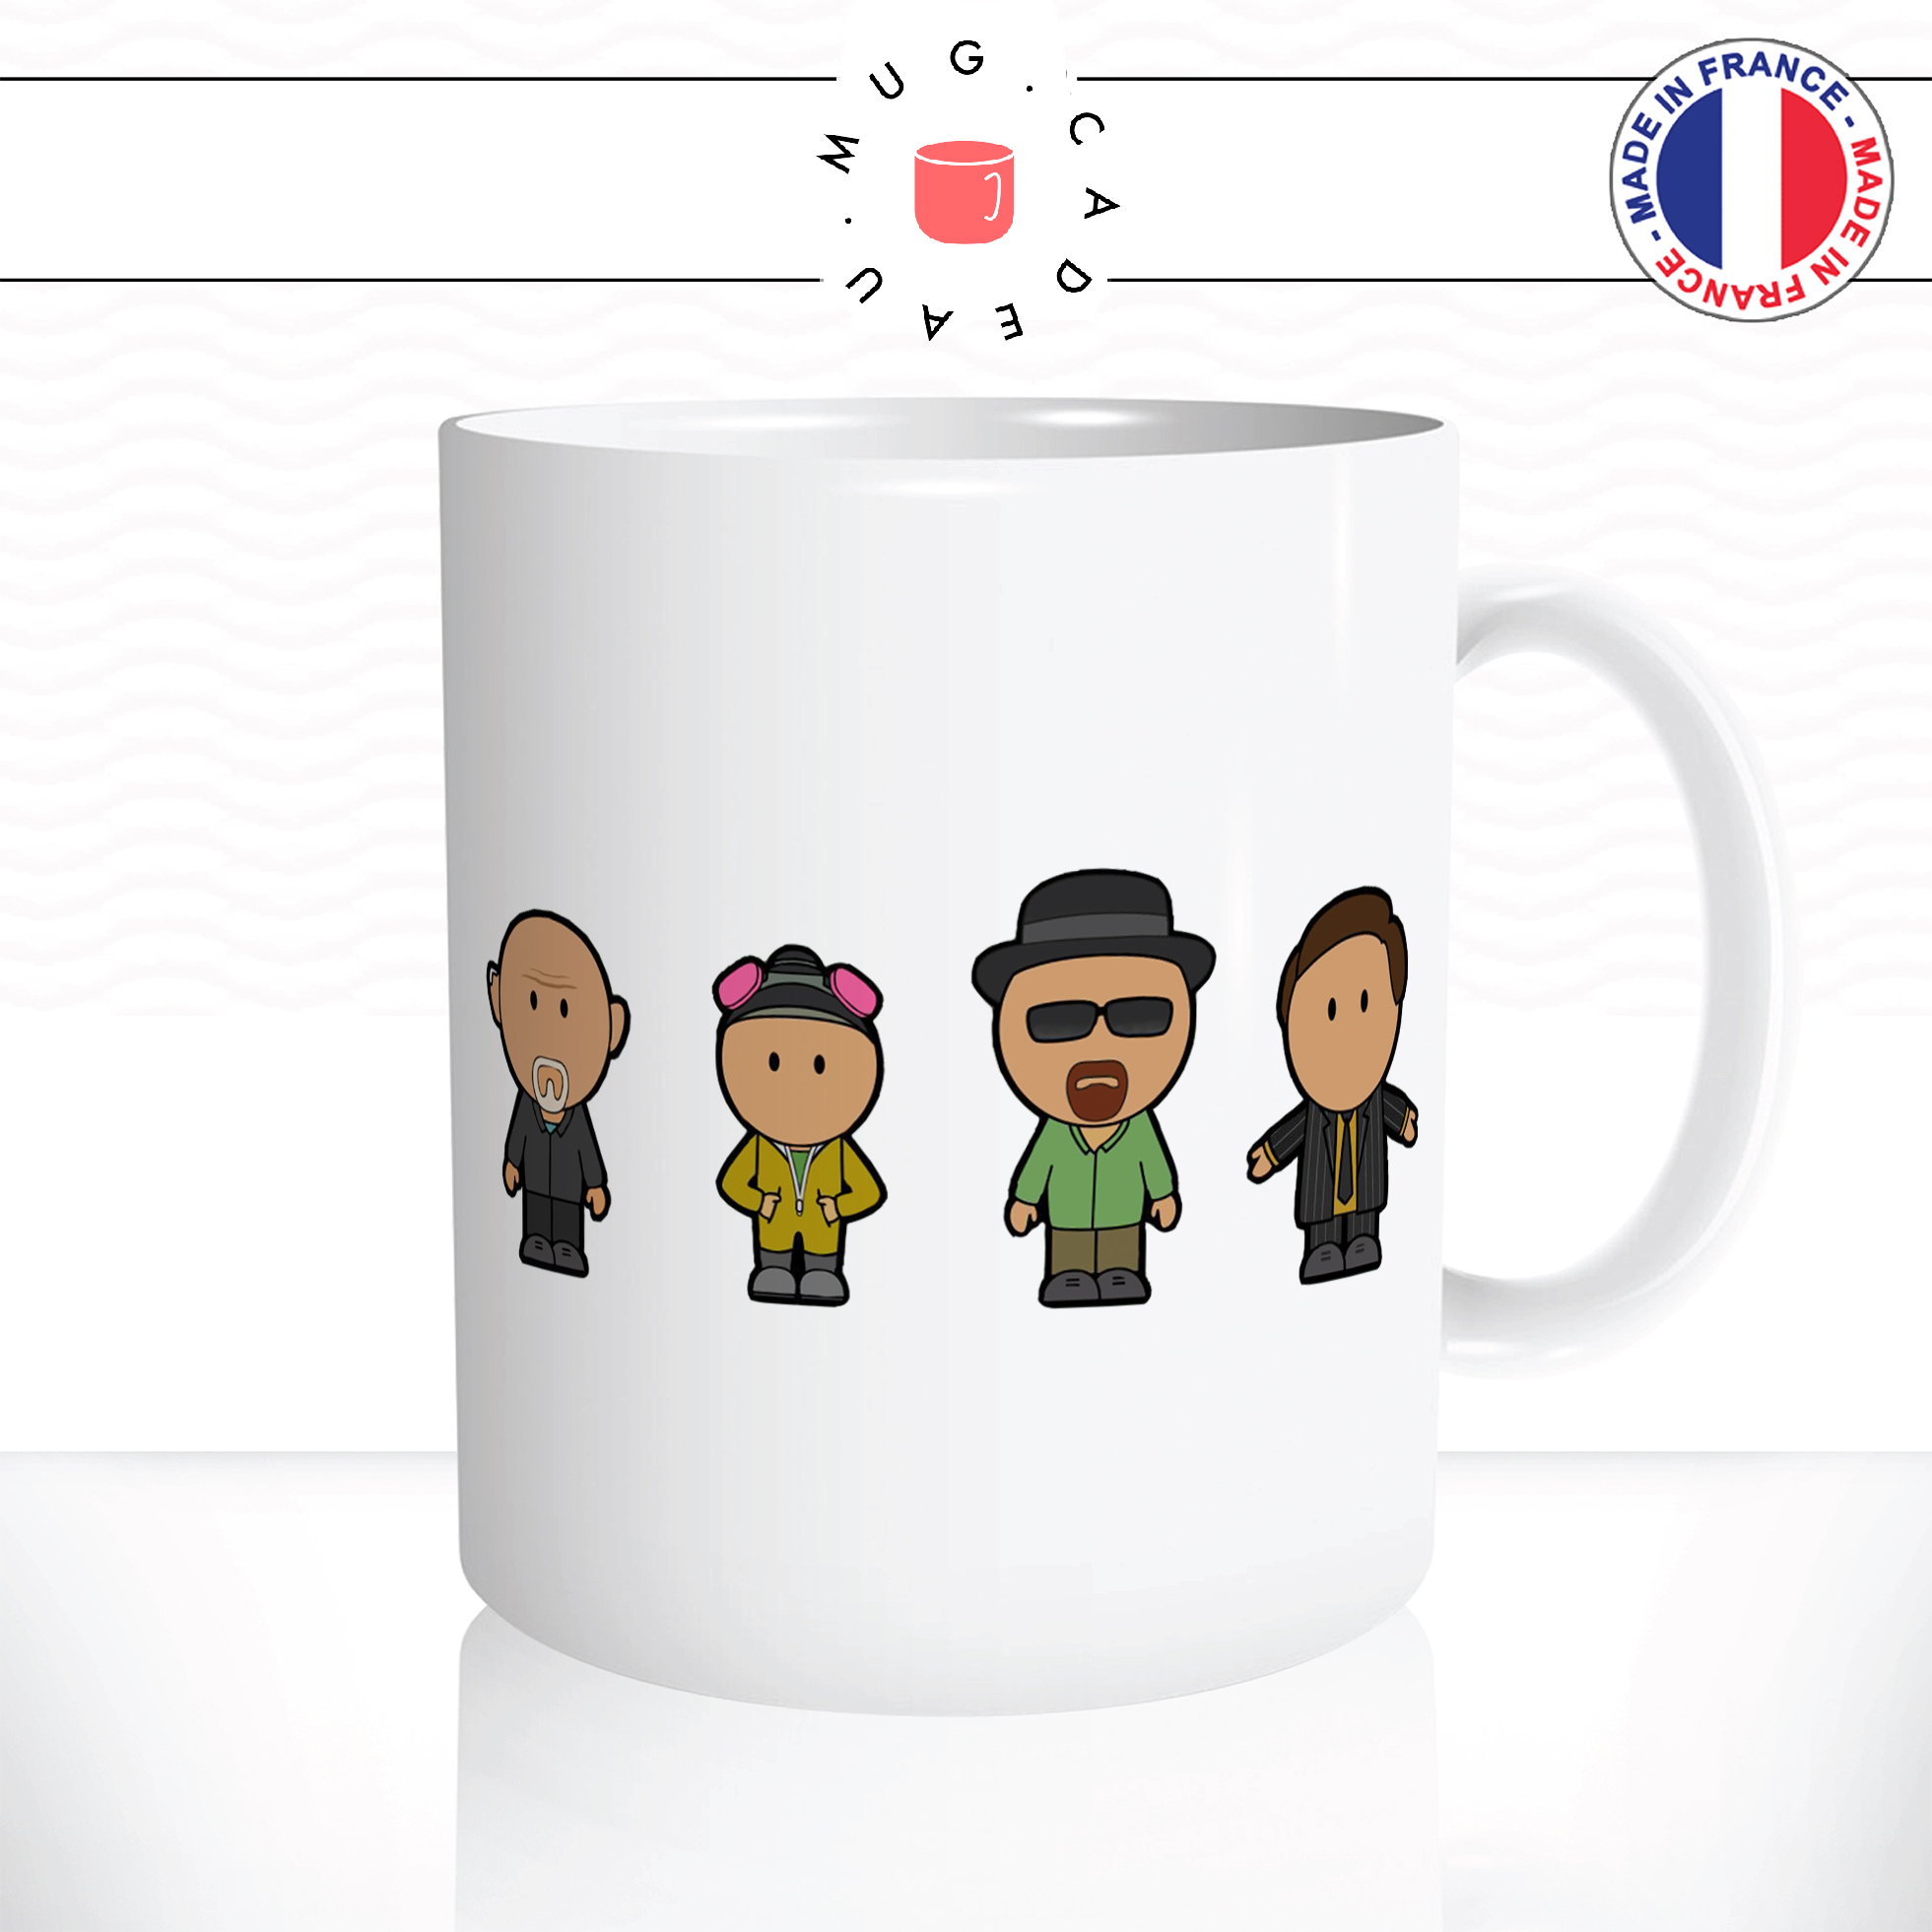 mug-tasse-ref5-breaking-bad-personnages-dessin-anime-cafe-the-mugs-tasses-personnalise-anse-droite